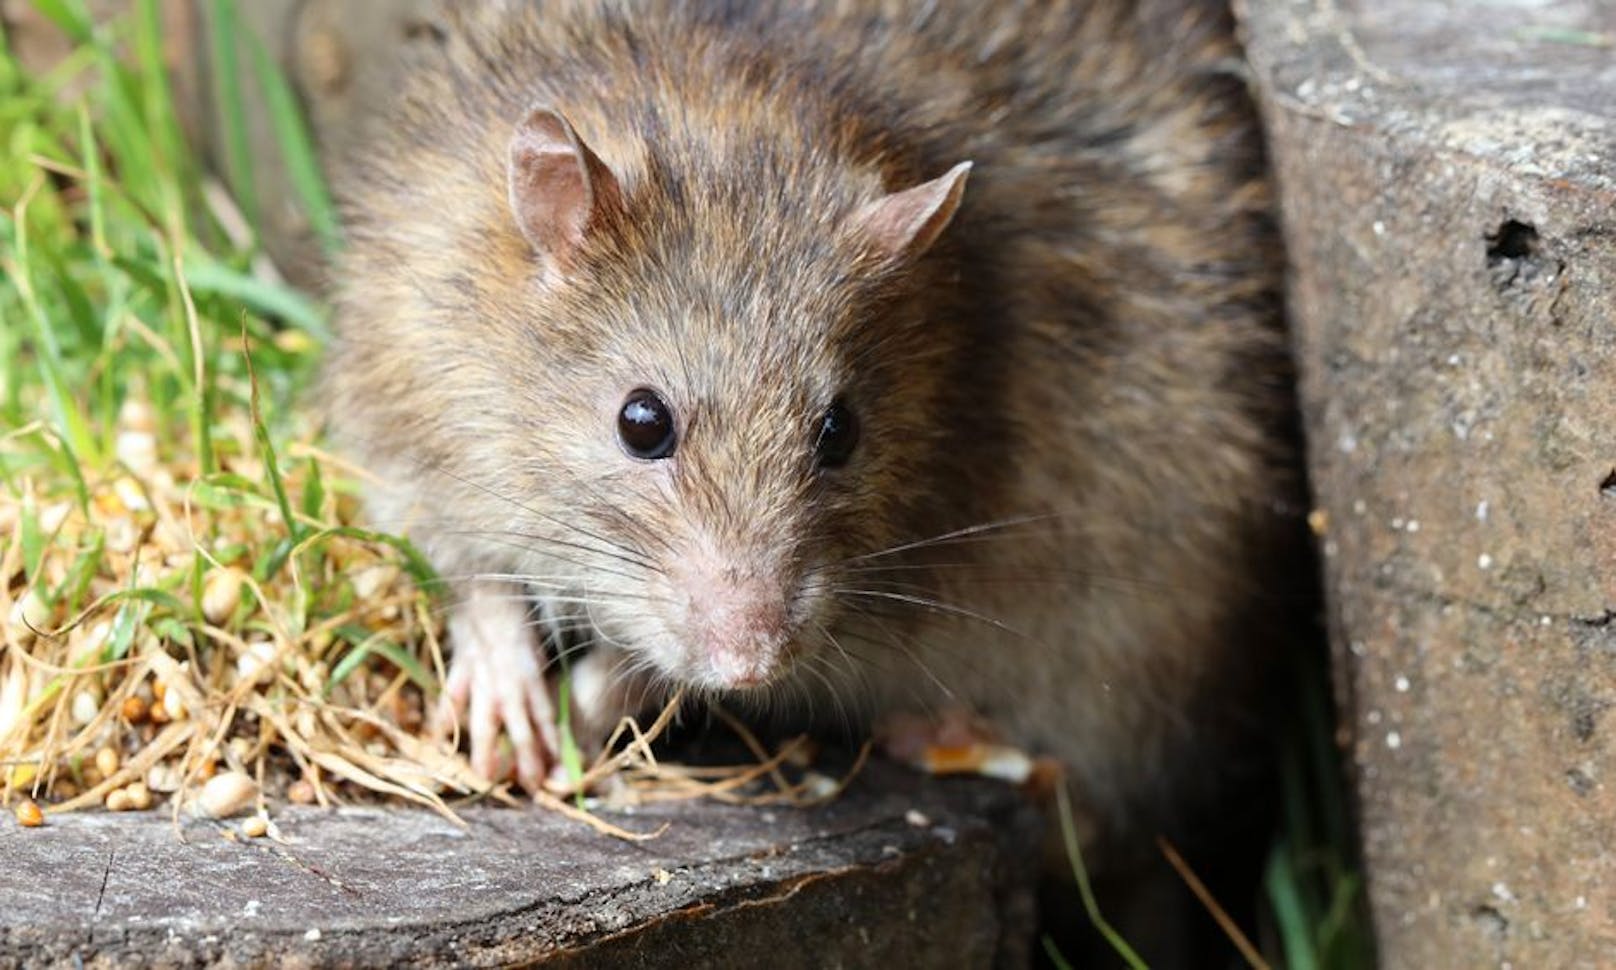 Ratten-Alarm in Gemeinde! Schädlingsbekämpfer vor Ort